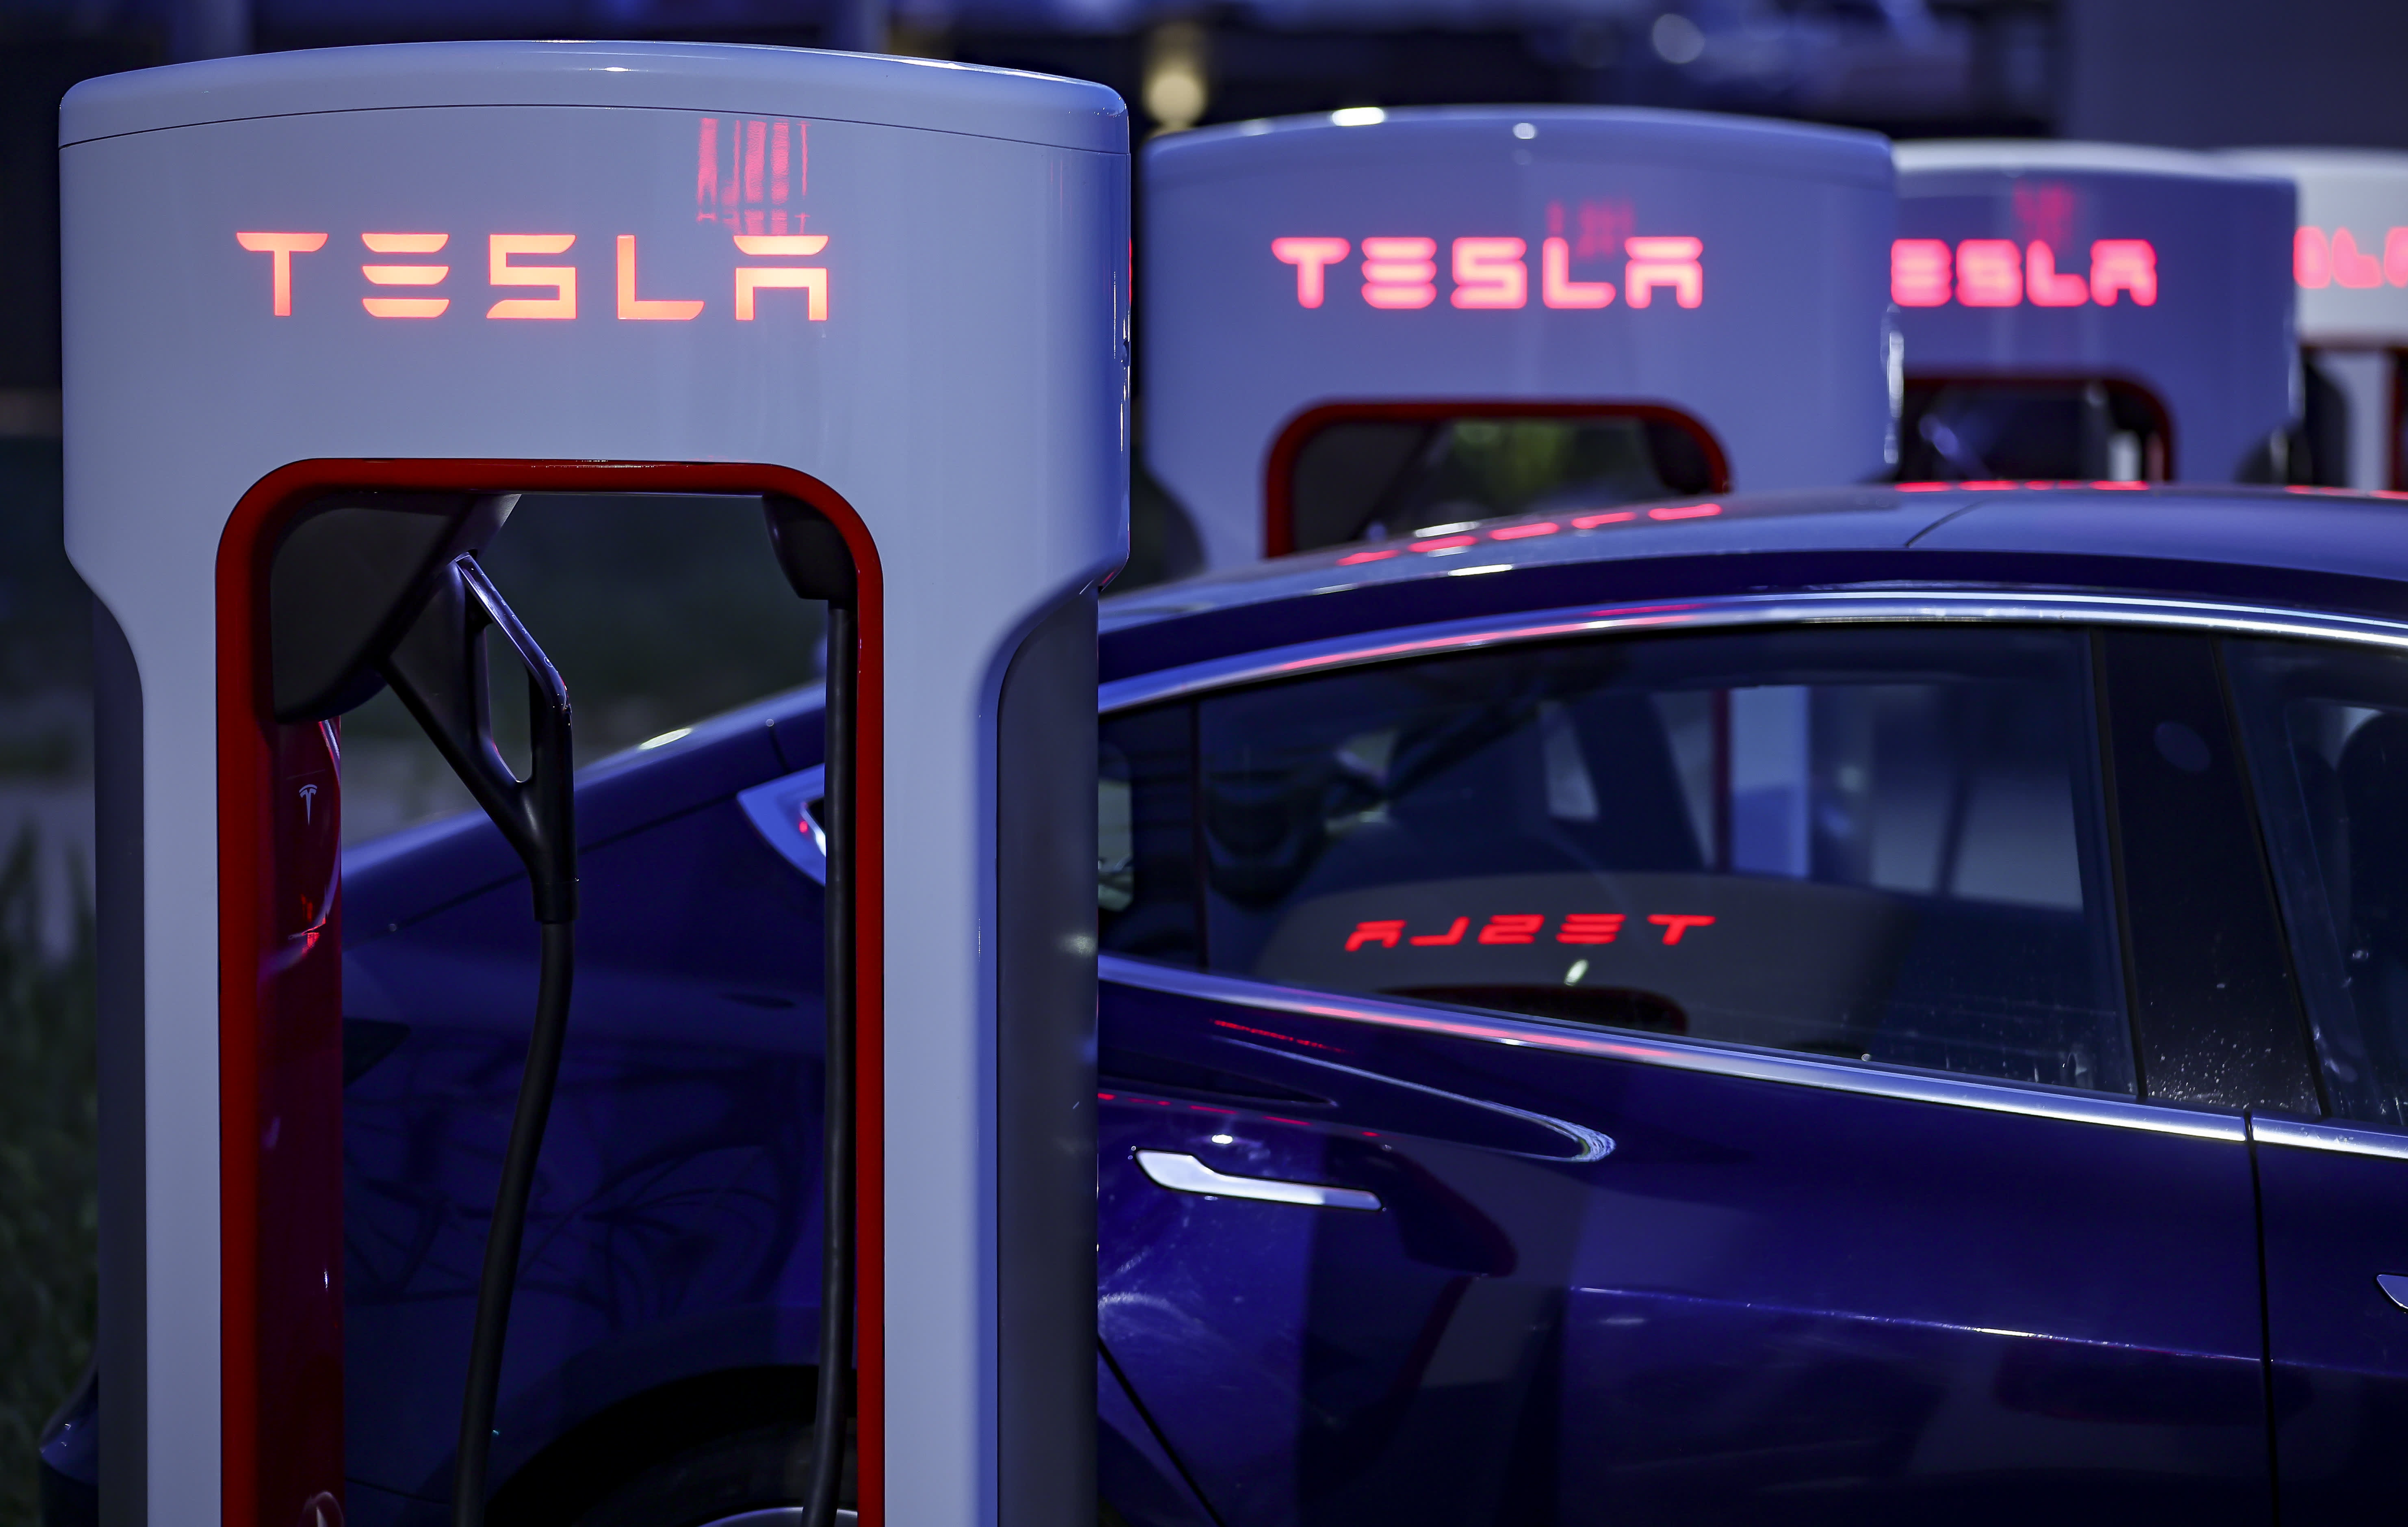 Tesla stock 'holiday coal' will turn into 'diamond' over long term, Canaccord Genuity says